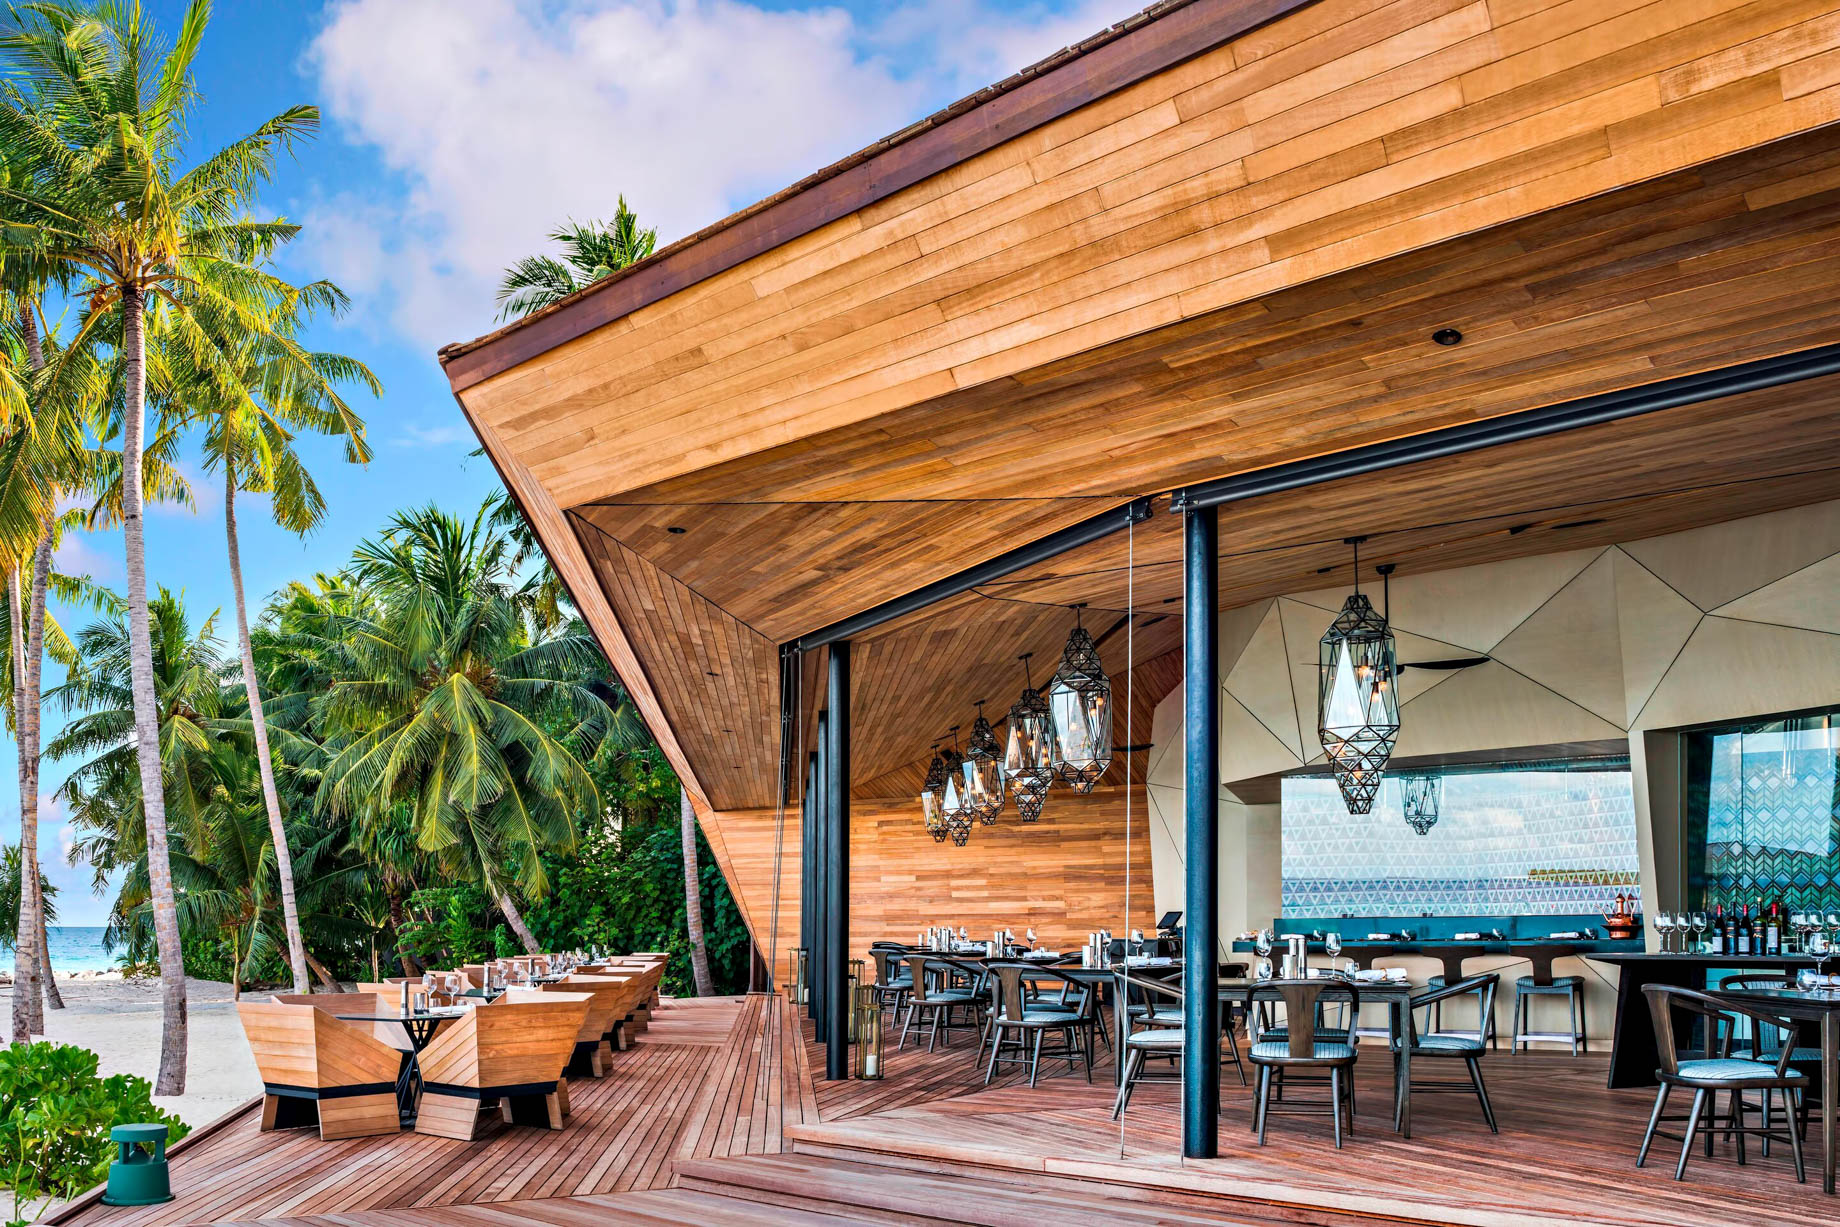 The St. Regis Maldives Vommuli Resort – Dhaalu Atoll, Maldives – Orientale Restaurant Asian